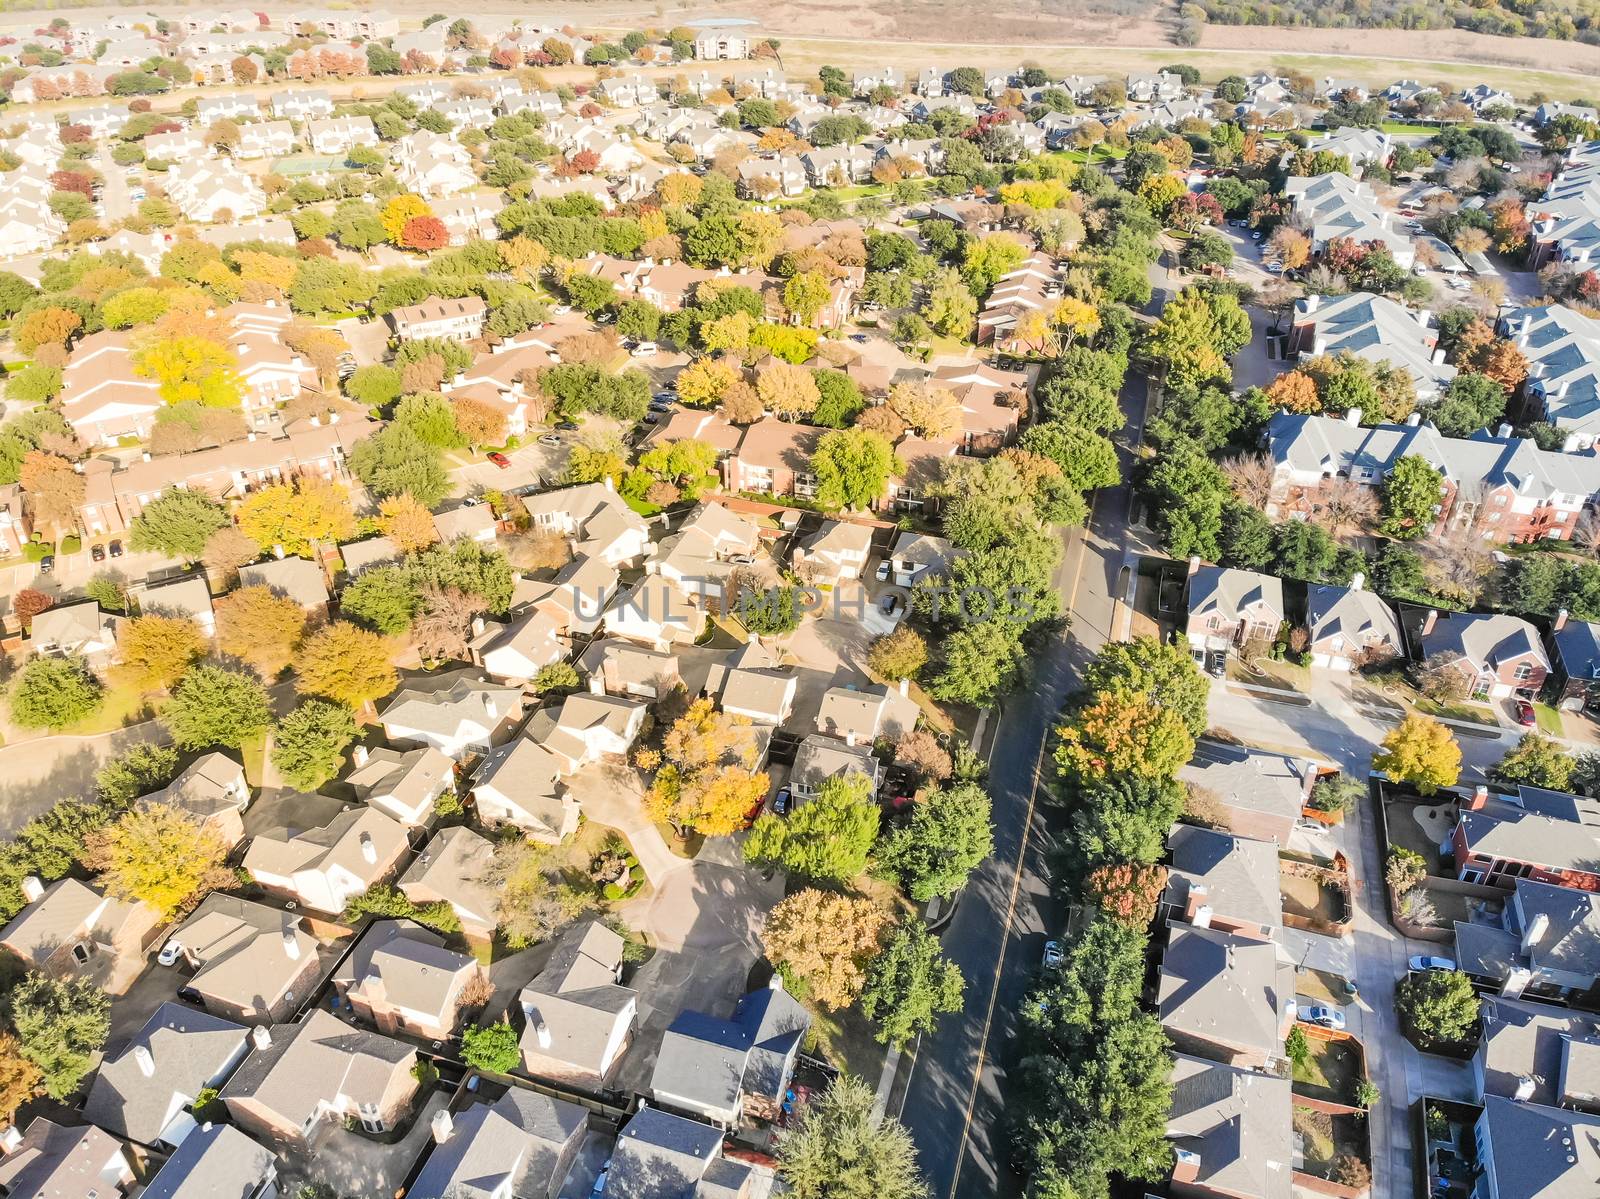 Top view urban sprawl suburbs Dallas during autumn season with c by trongnguyen